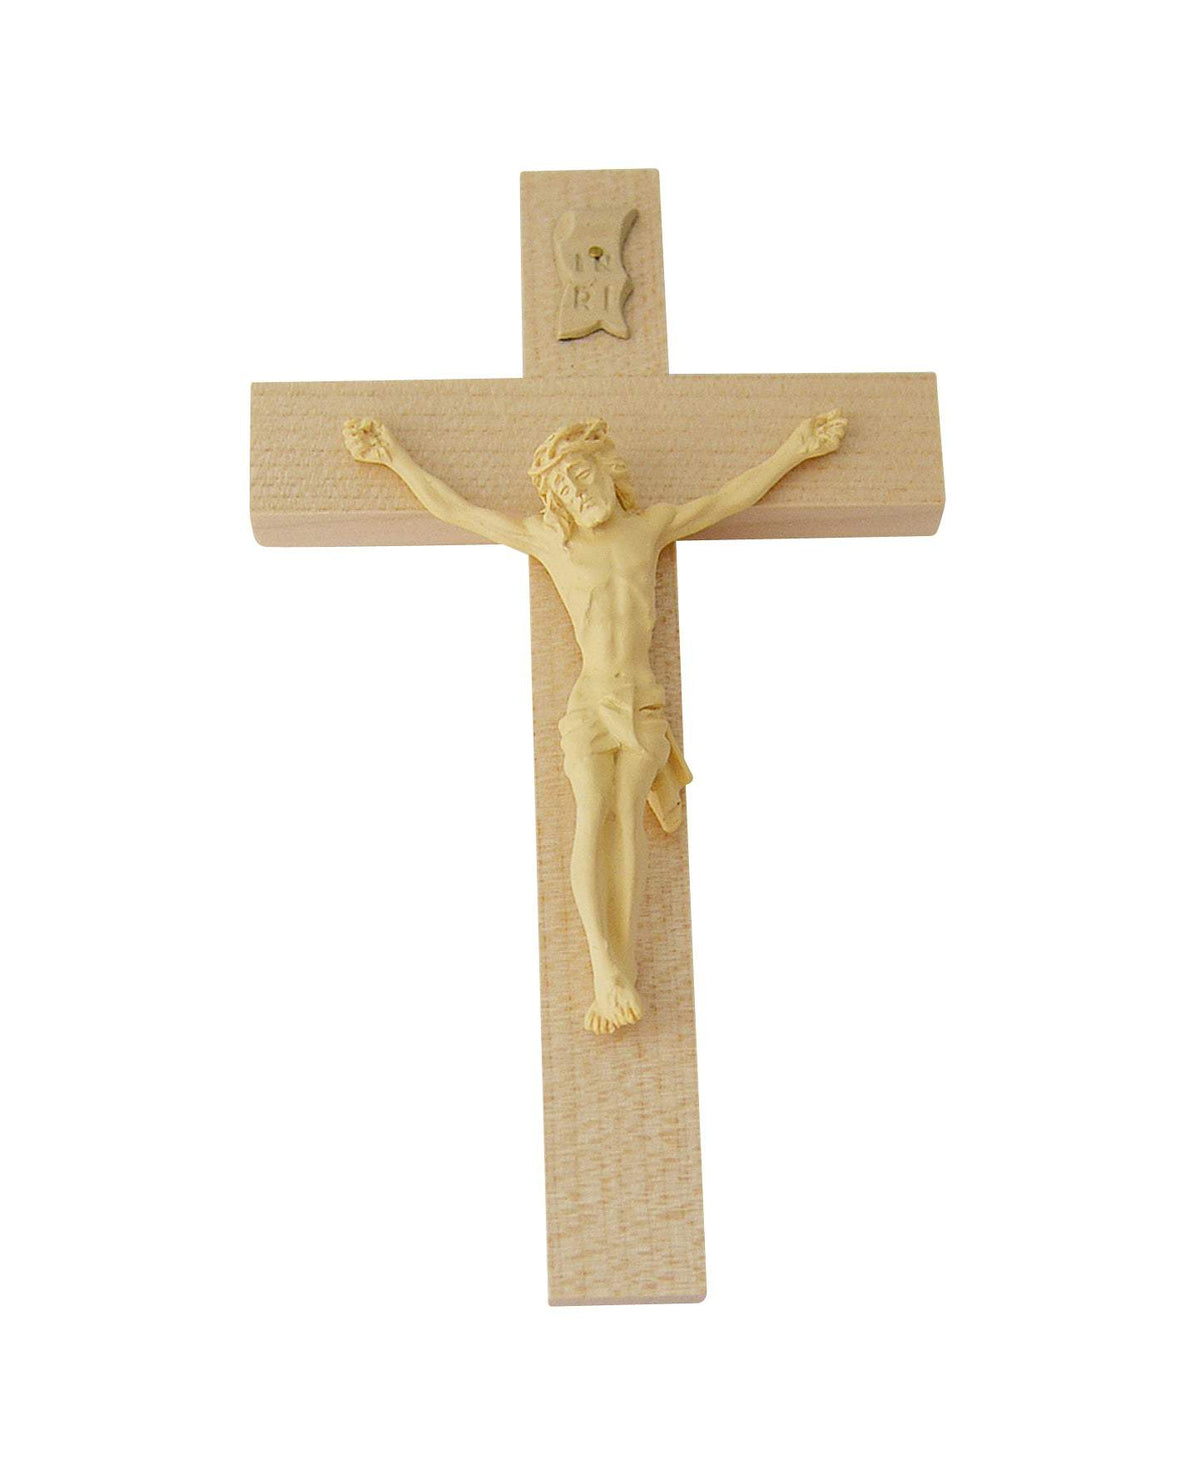 Holz - Kreuz-Nikolai-Devotionalien,Kreuze